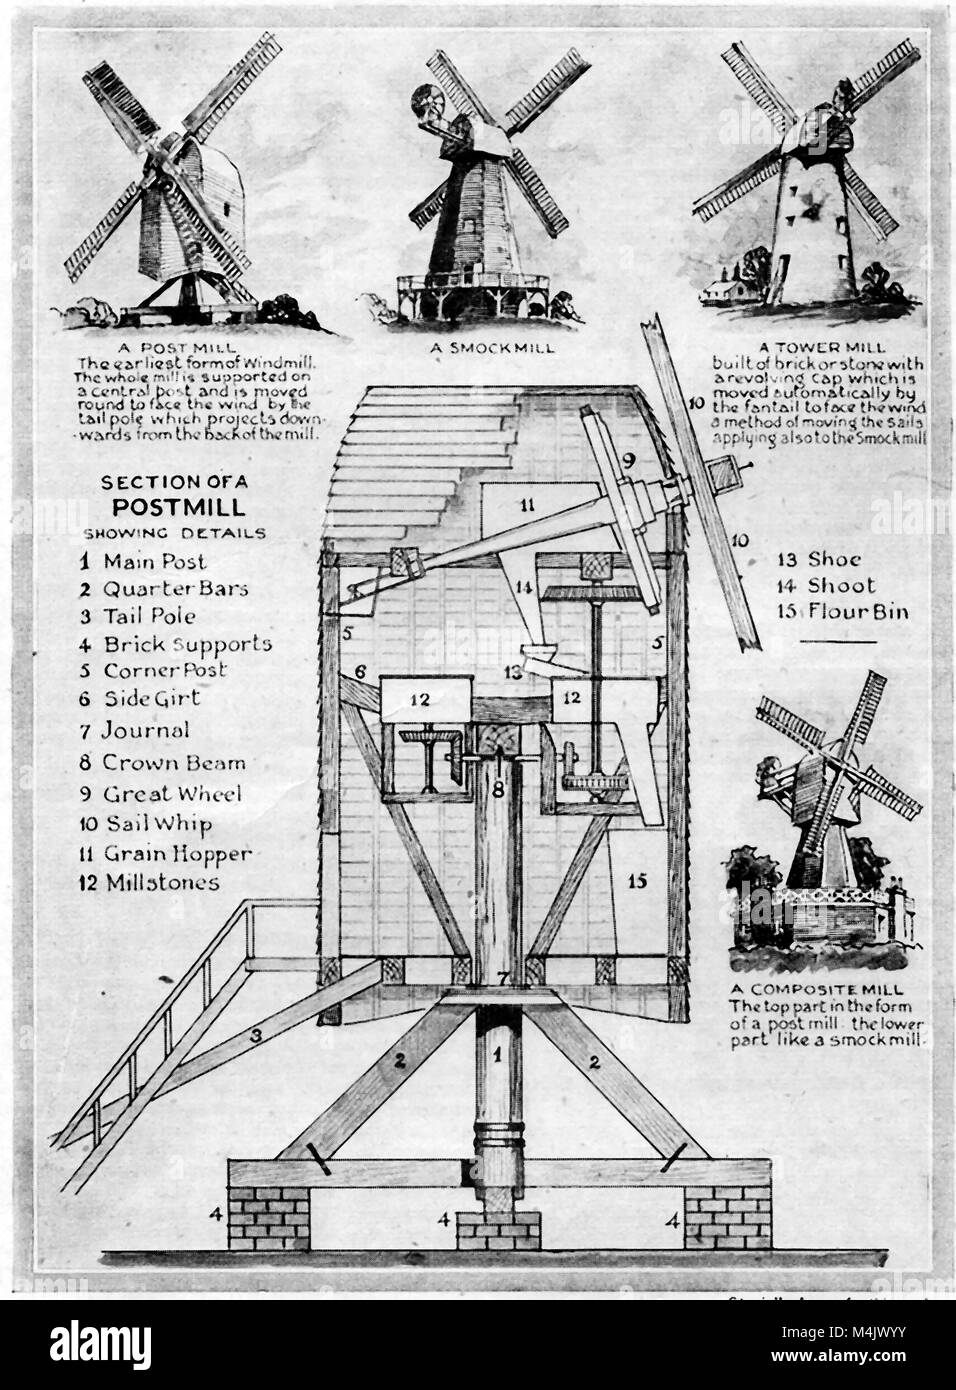 windmill parts diagram